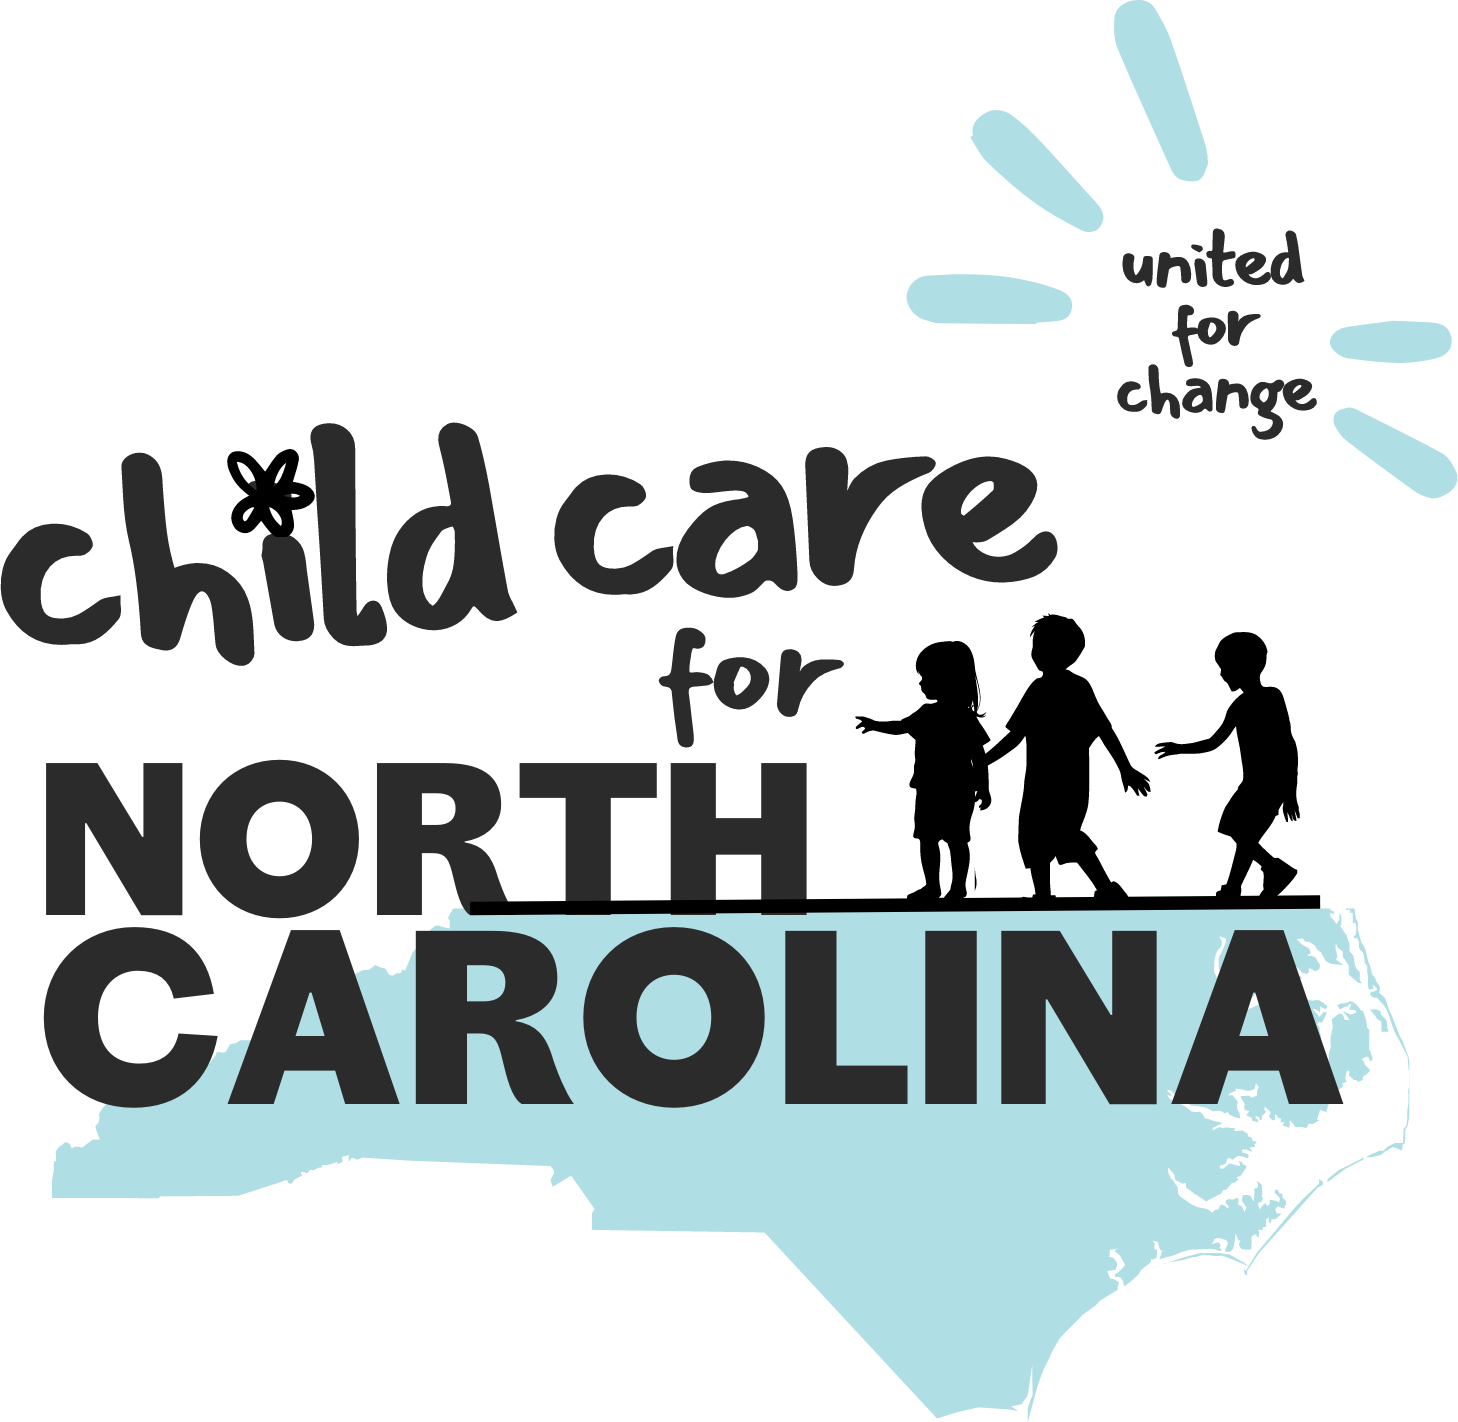 Child Care Provider / Teacher Toolkit